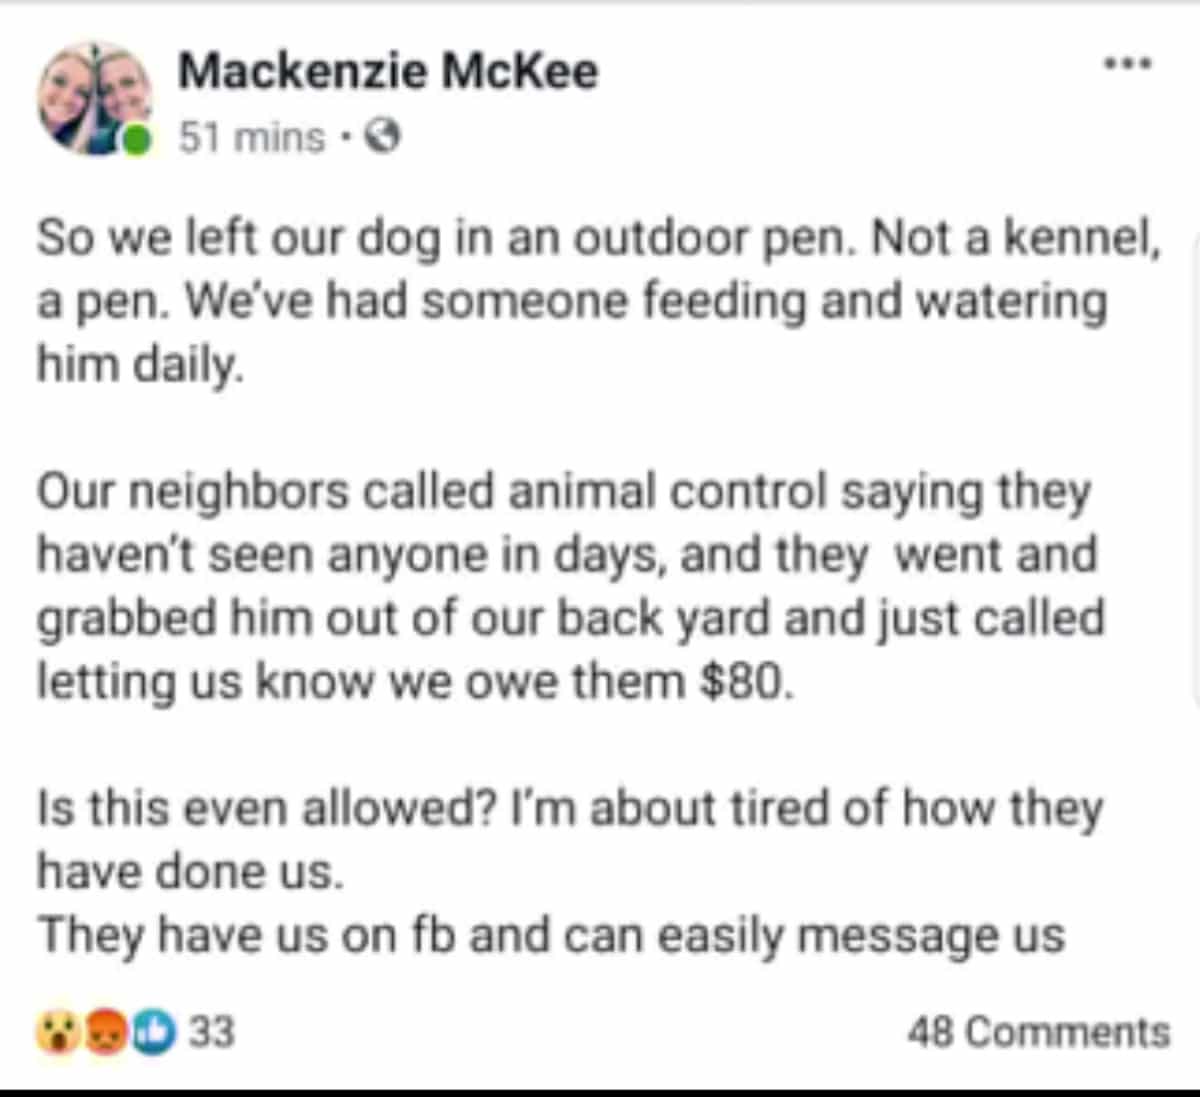 The post by Mackenzie McKee on Facebook